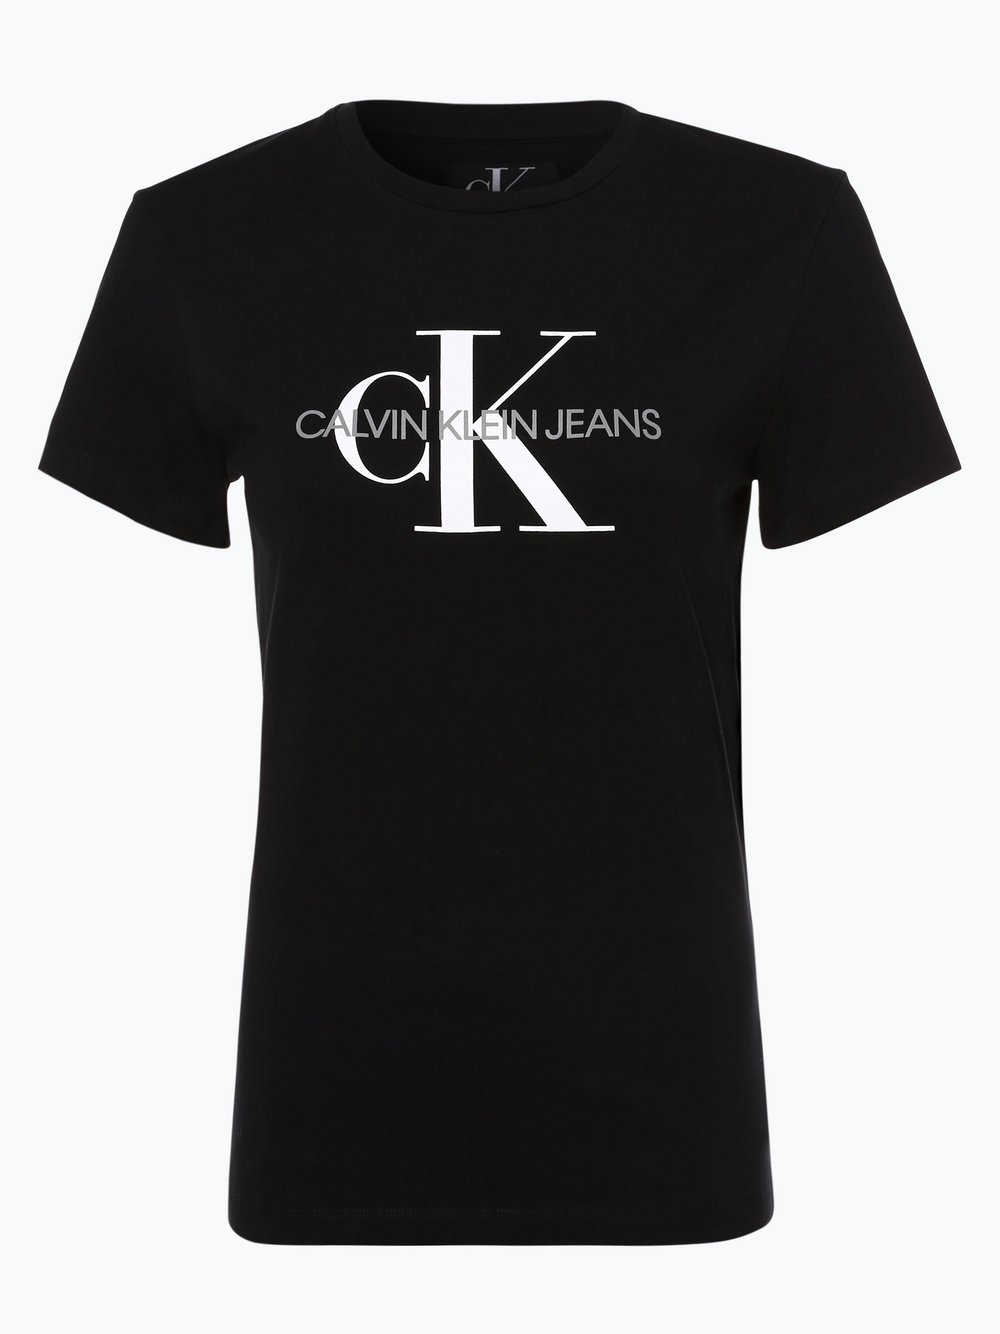 Calvin Klein Jeans - T-shirt damski – Heather, czarny